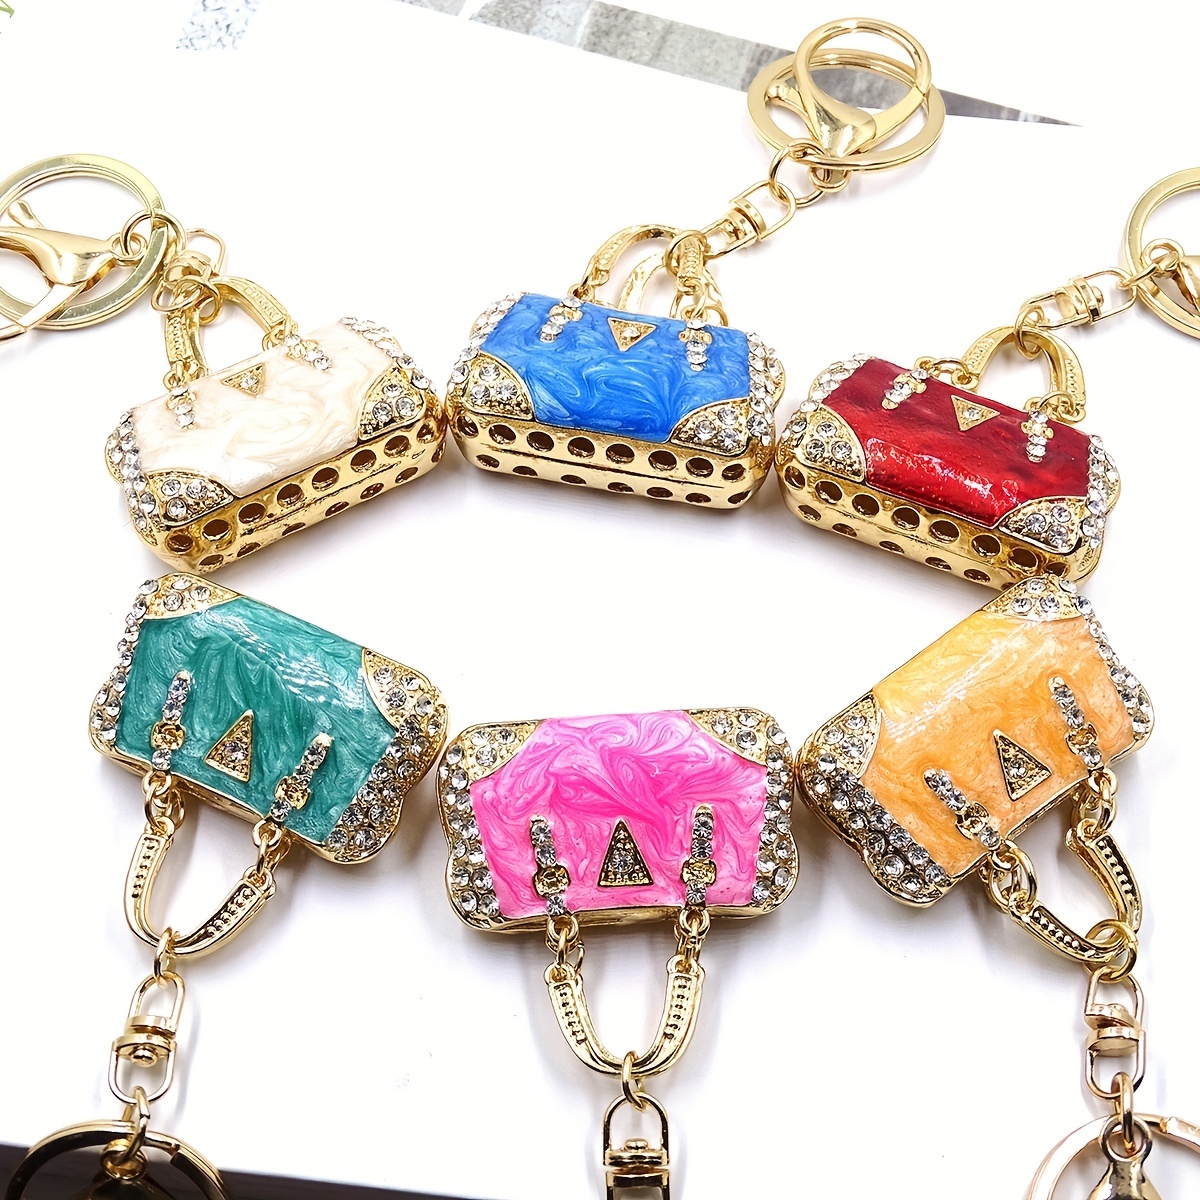 Tureclos Cute Key Chain Ring Cartoon Home Door Car Keychain Holder Handbag Bag Decoration Keyring Pendant Jewelry for Girls Woman Pink, Adult Unisex